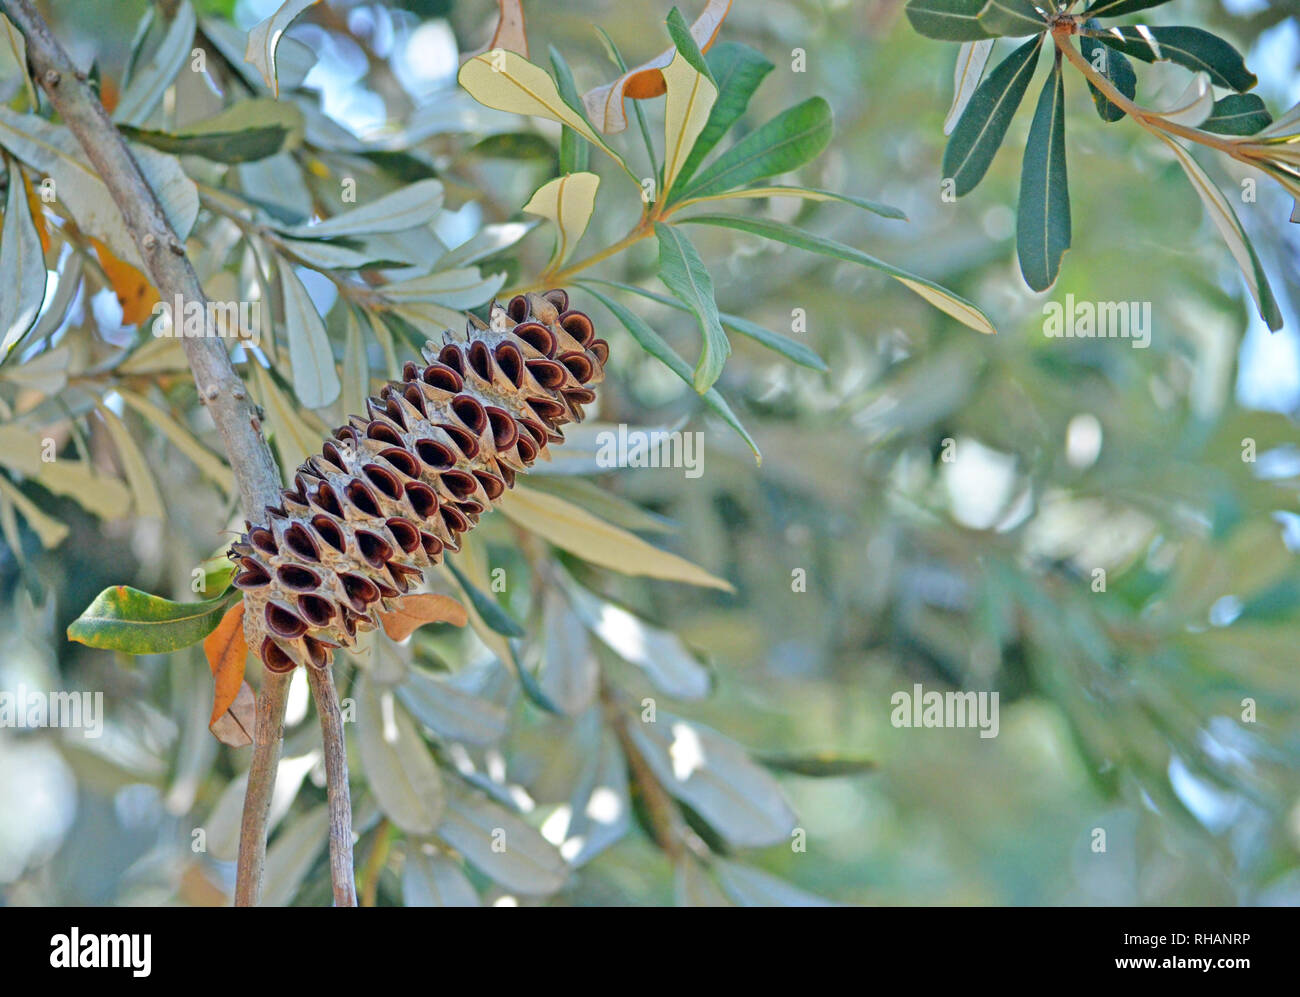 Australian native Coast Banskia seed pod, Banksia integrifolia, family Proteaceae, Wollongong, NSW, Australia. Leaves dark green above and white below Stock Photo